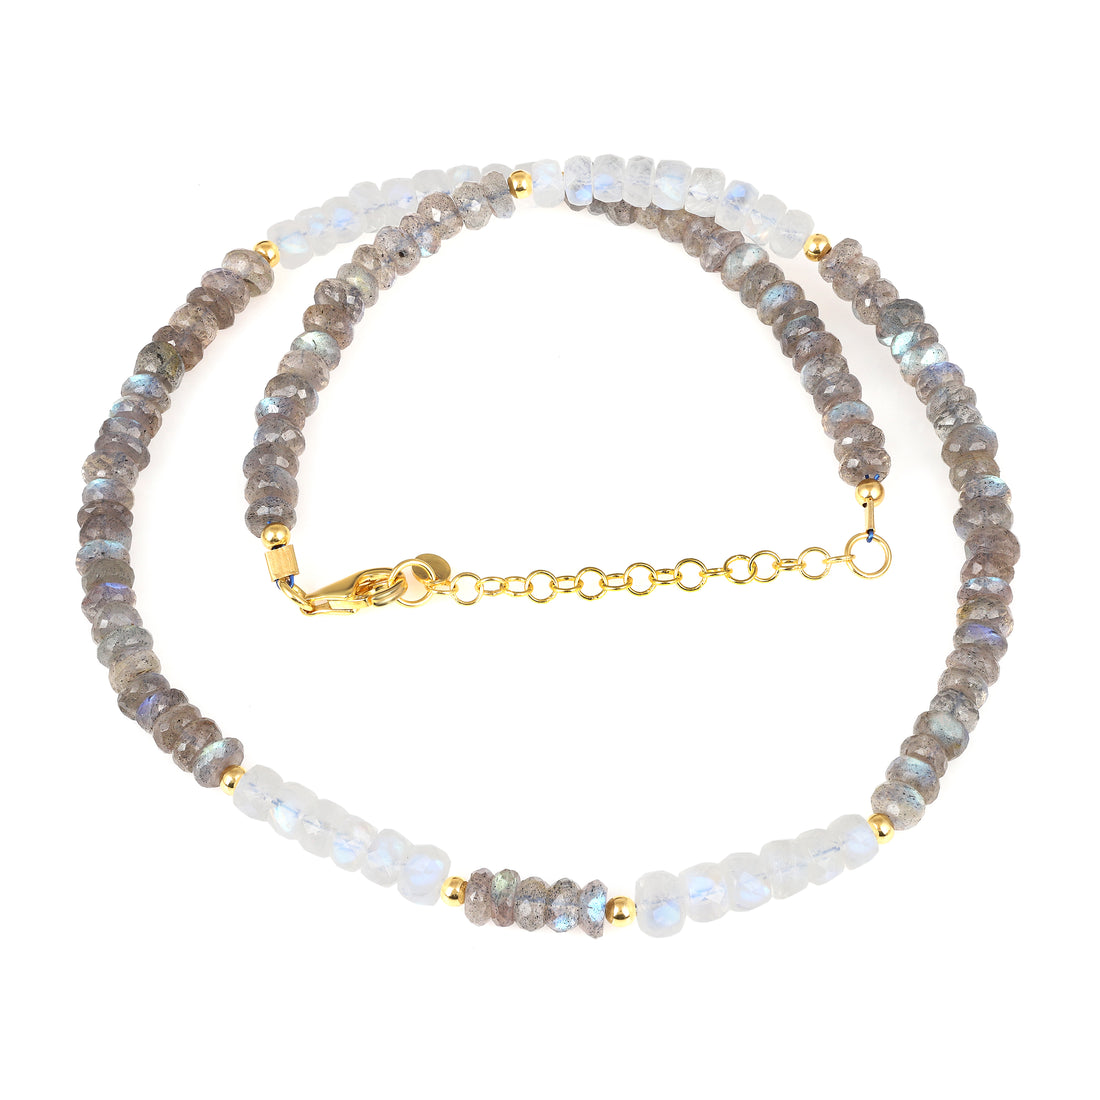 Rainbow Moonstone and Labradorite Silver Necklace